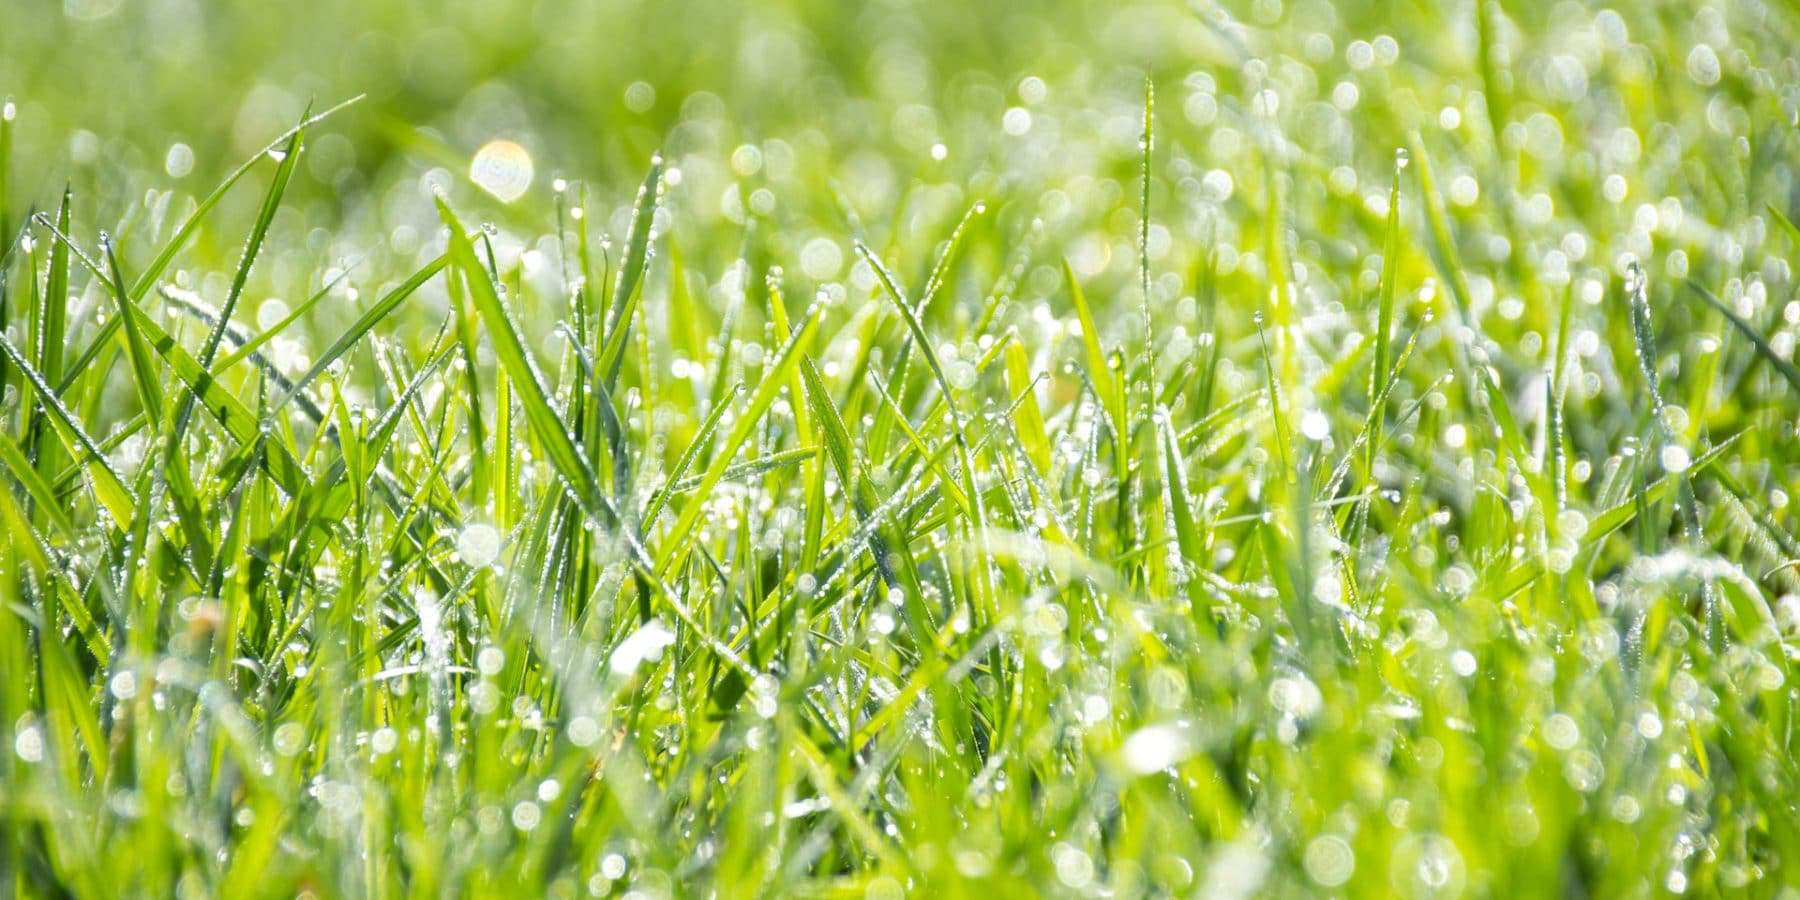 image of moisture on grass